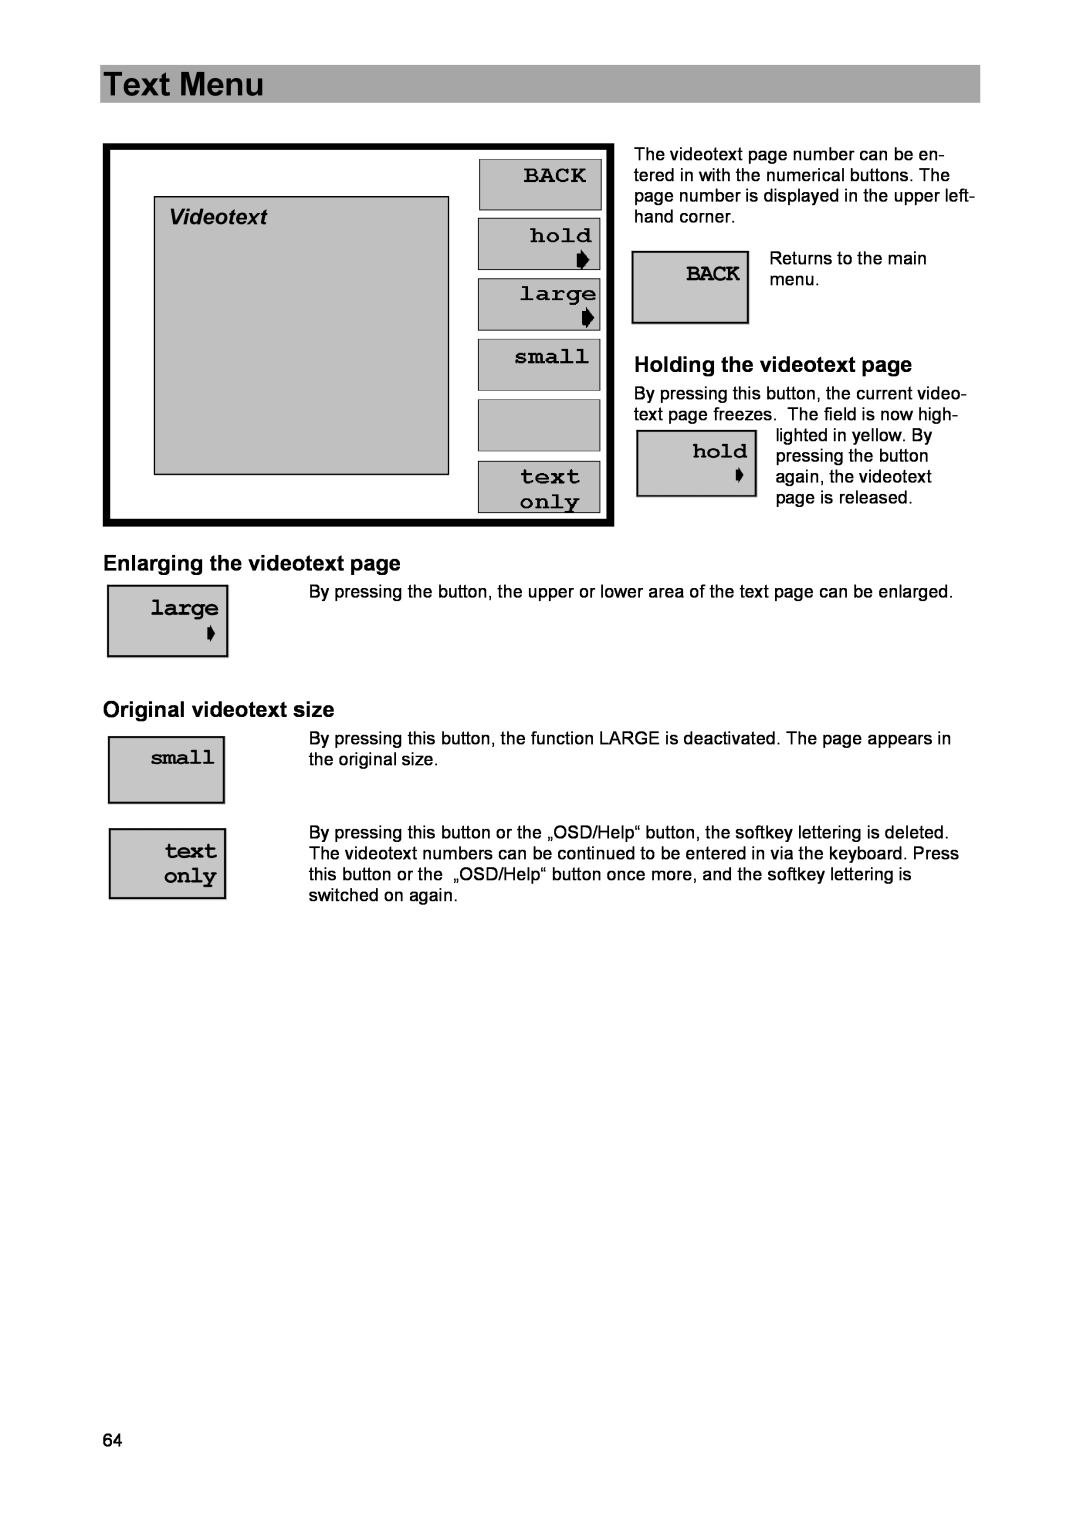 DreamGEAR MSK 33 Text Menu, Enlarging the videotext page, Holding the videotext page, Original videotext size, Videotext 